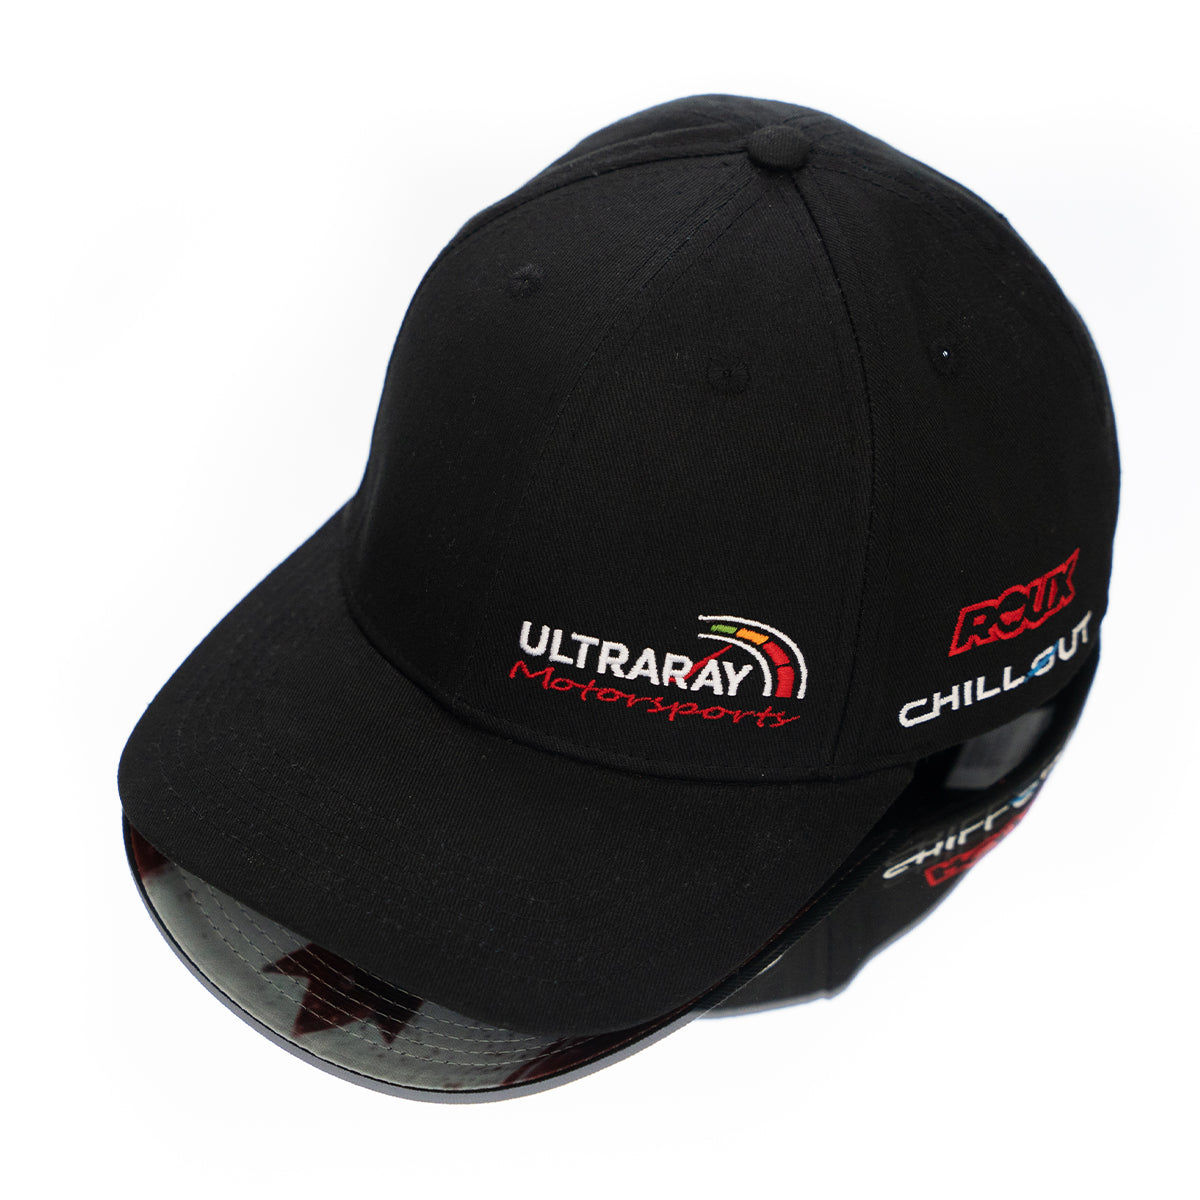 Ultraray Motorsports